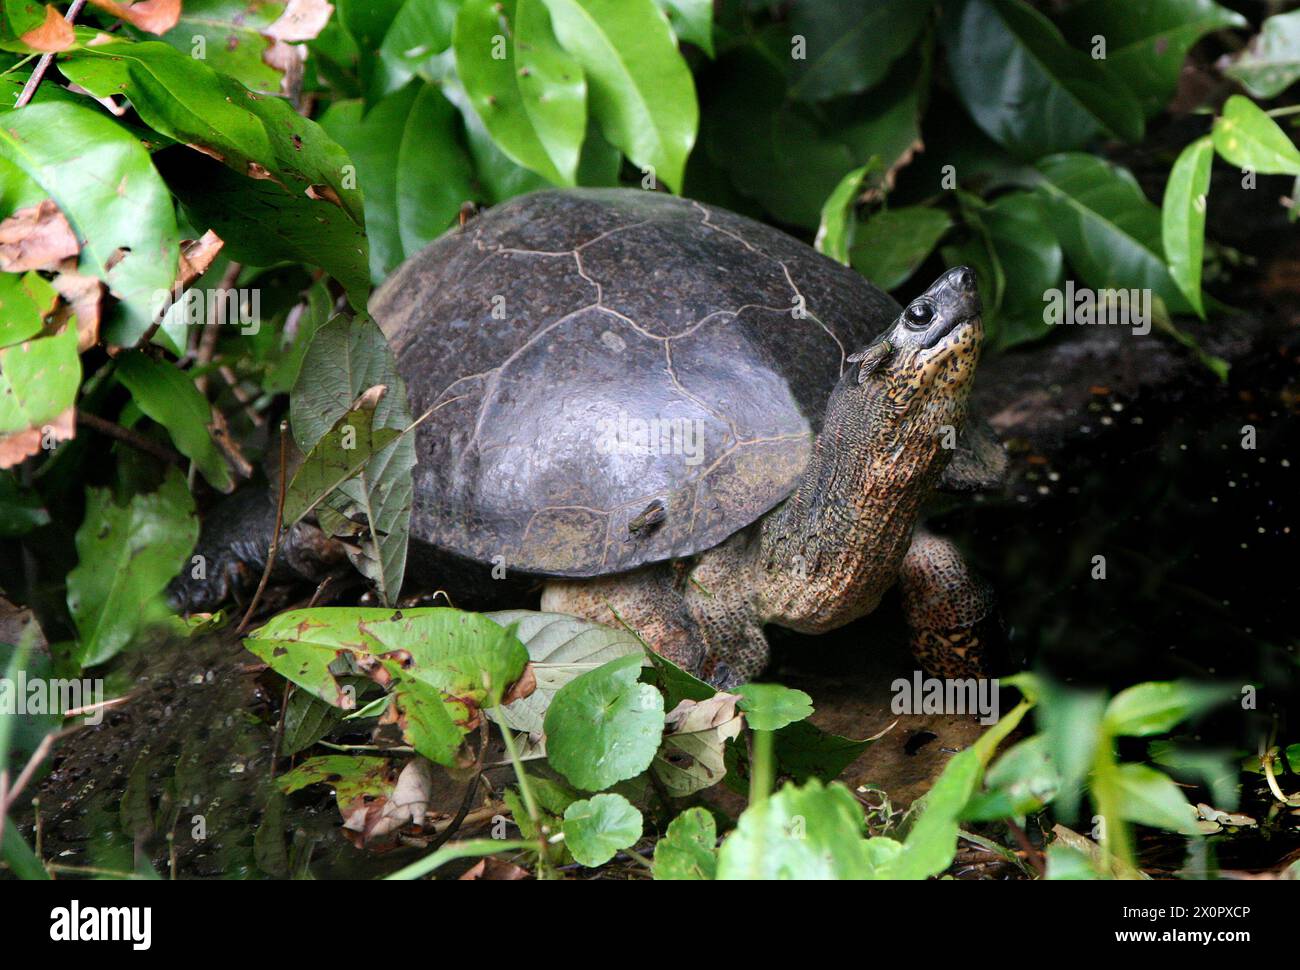 Black River Turtle or Black Wood Turtle, Rhinoclemmys funerea, Geoemydidae. Tortuguero, Costa Rica. The black river turtle (Rhinoclemmys funerea), or Stock Photo